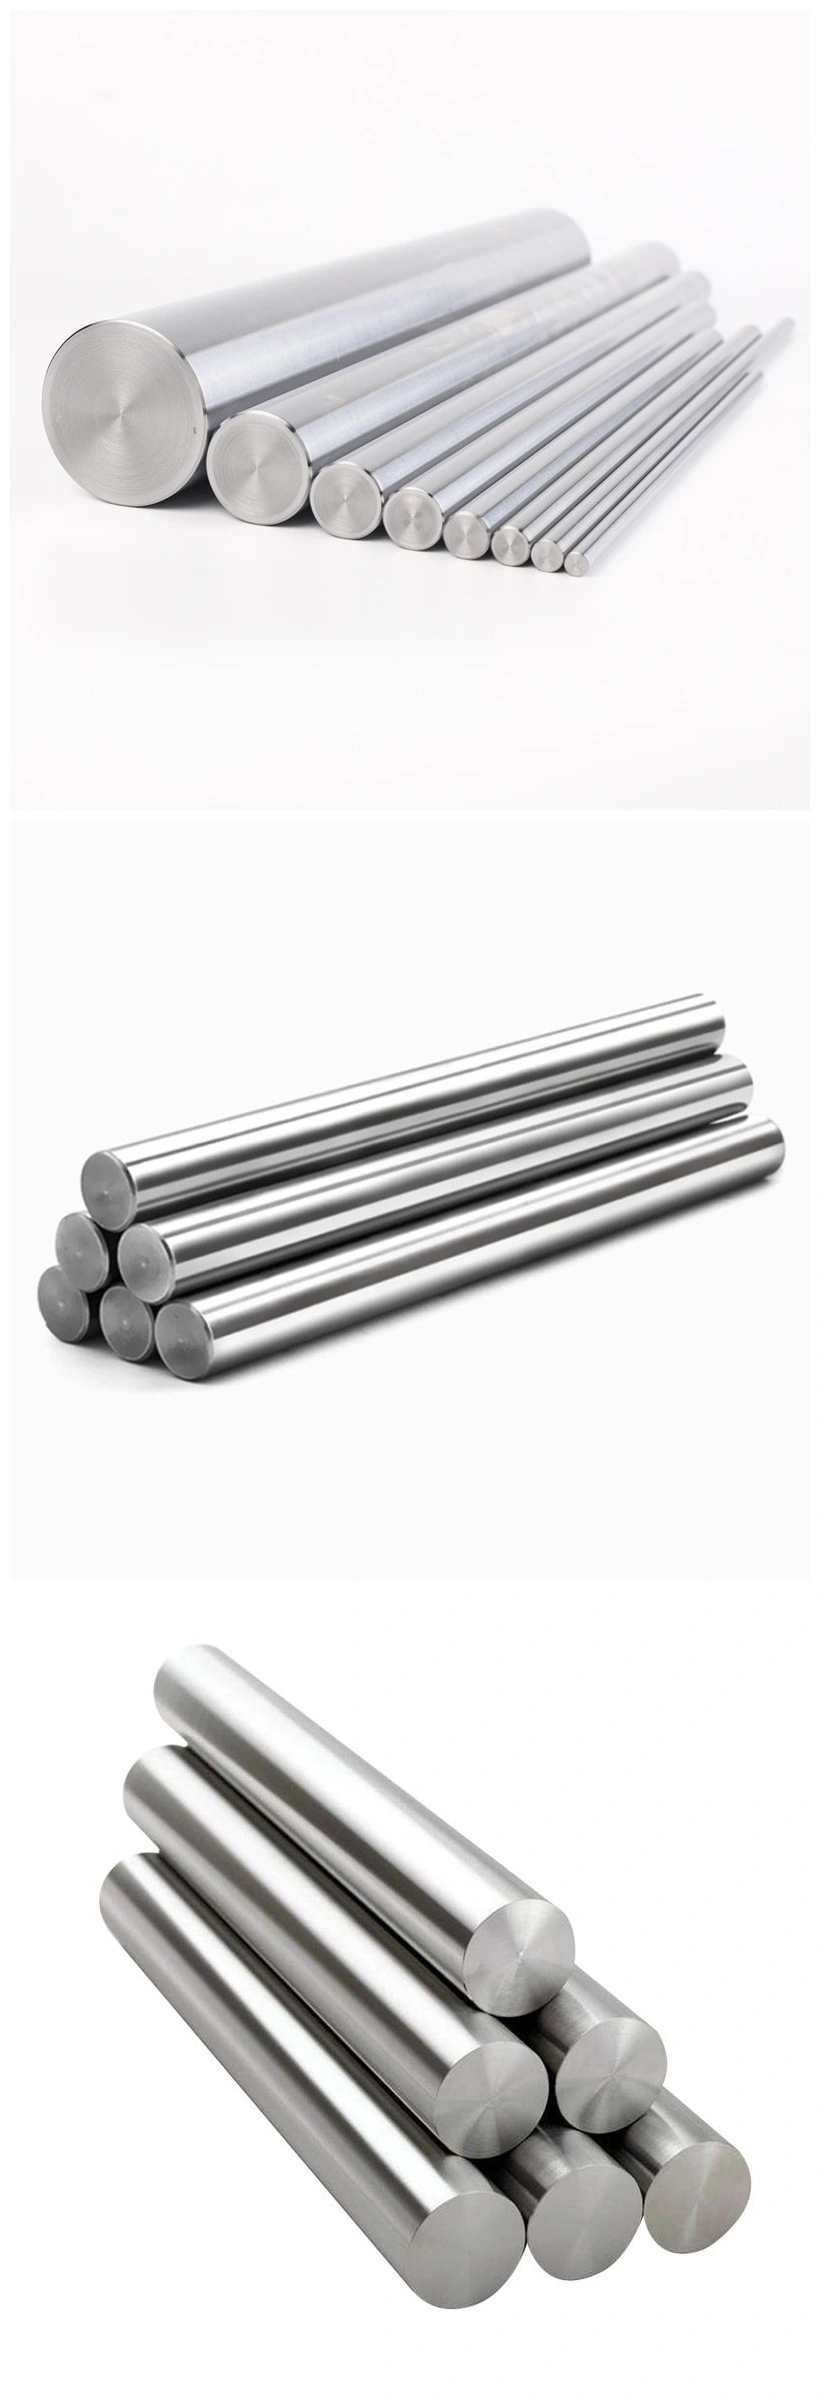 Hardened Chrome Plated Linear Shaft Stainless Steel Gcr15 Round Bar